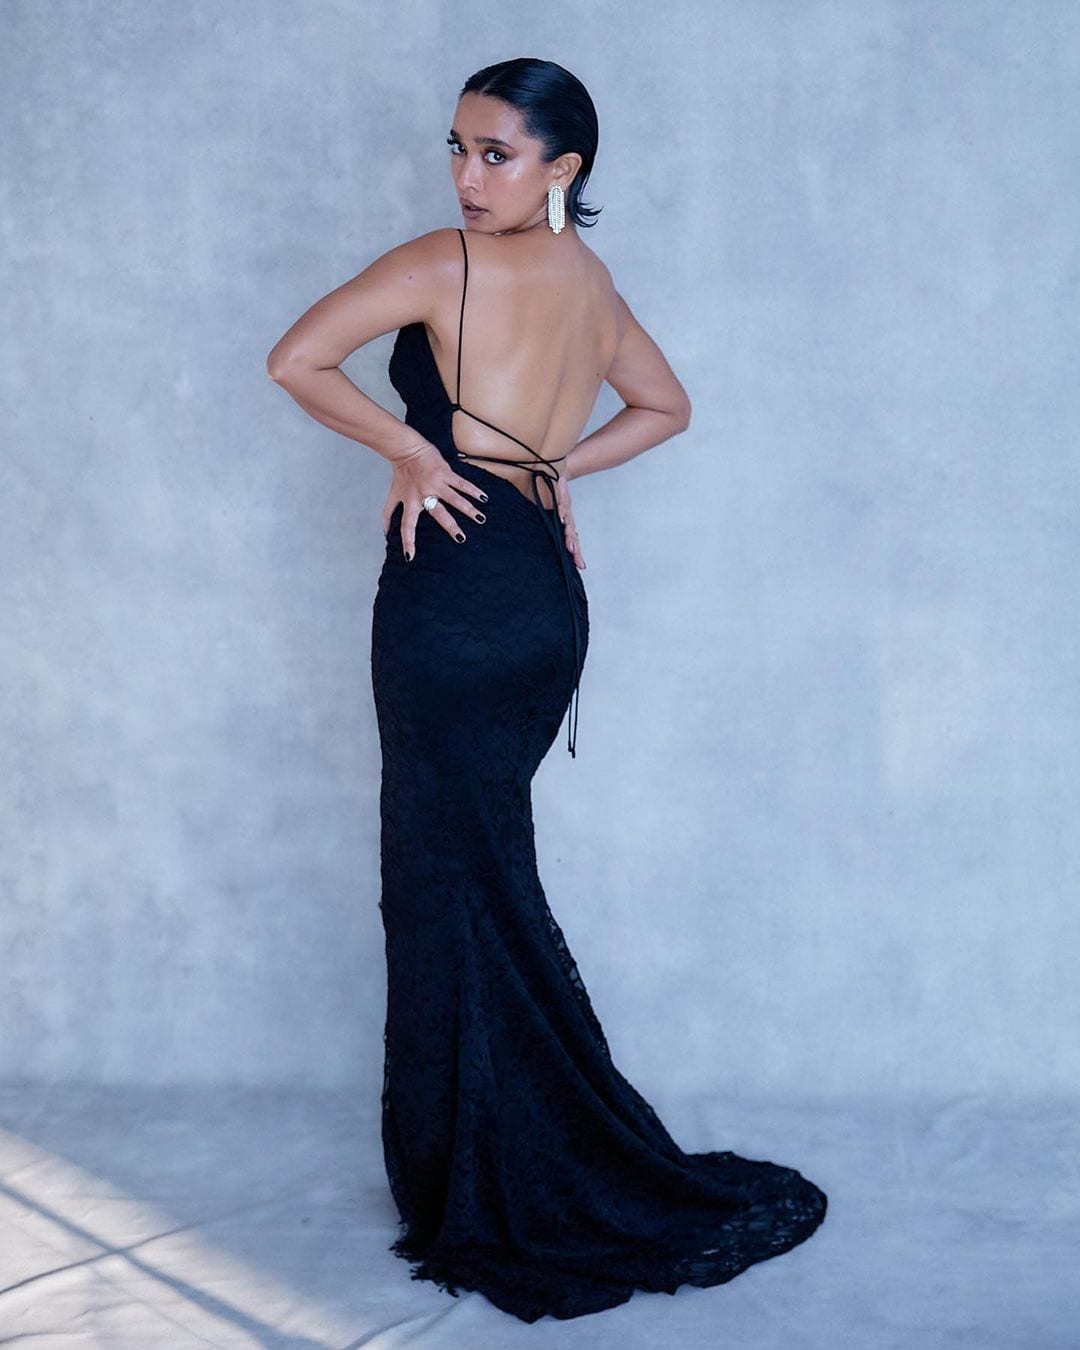 Sayani Gupta flaunts her sexy back in the black figure-hugging dress.